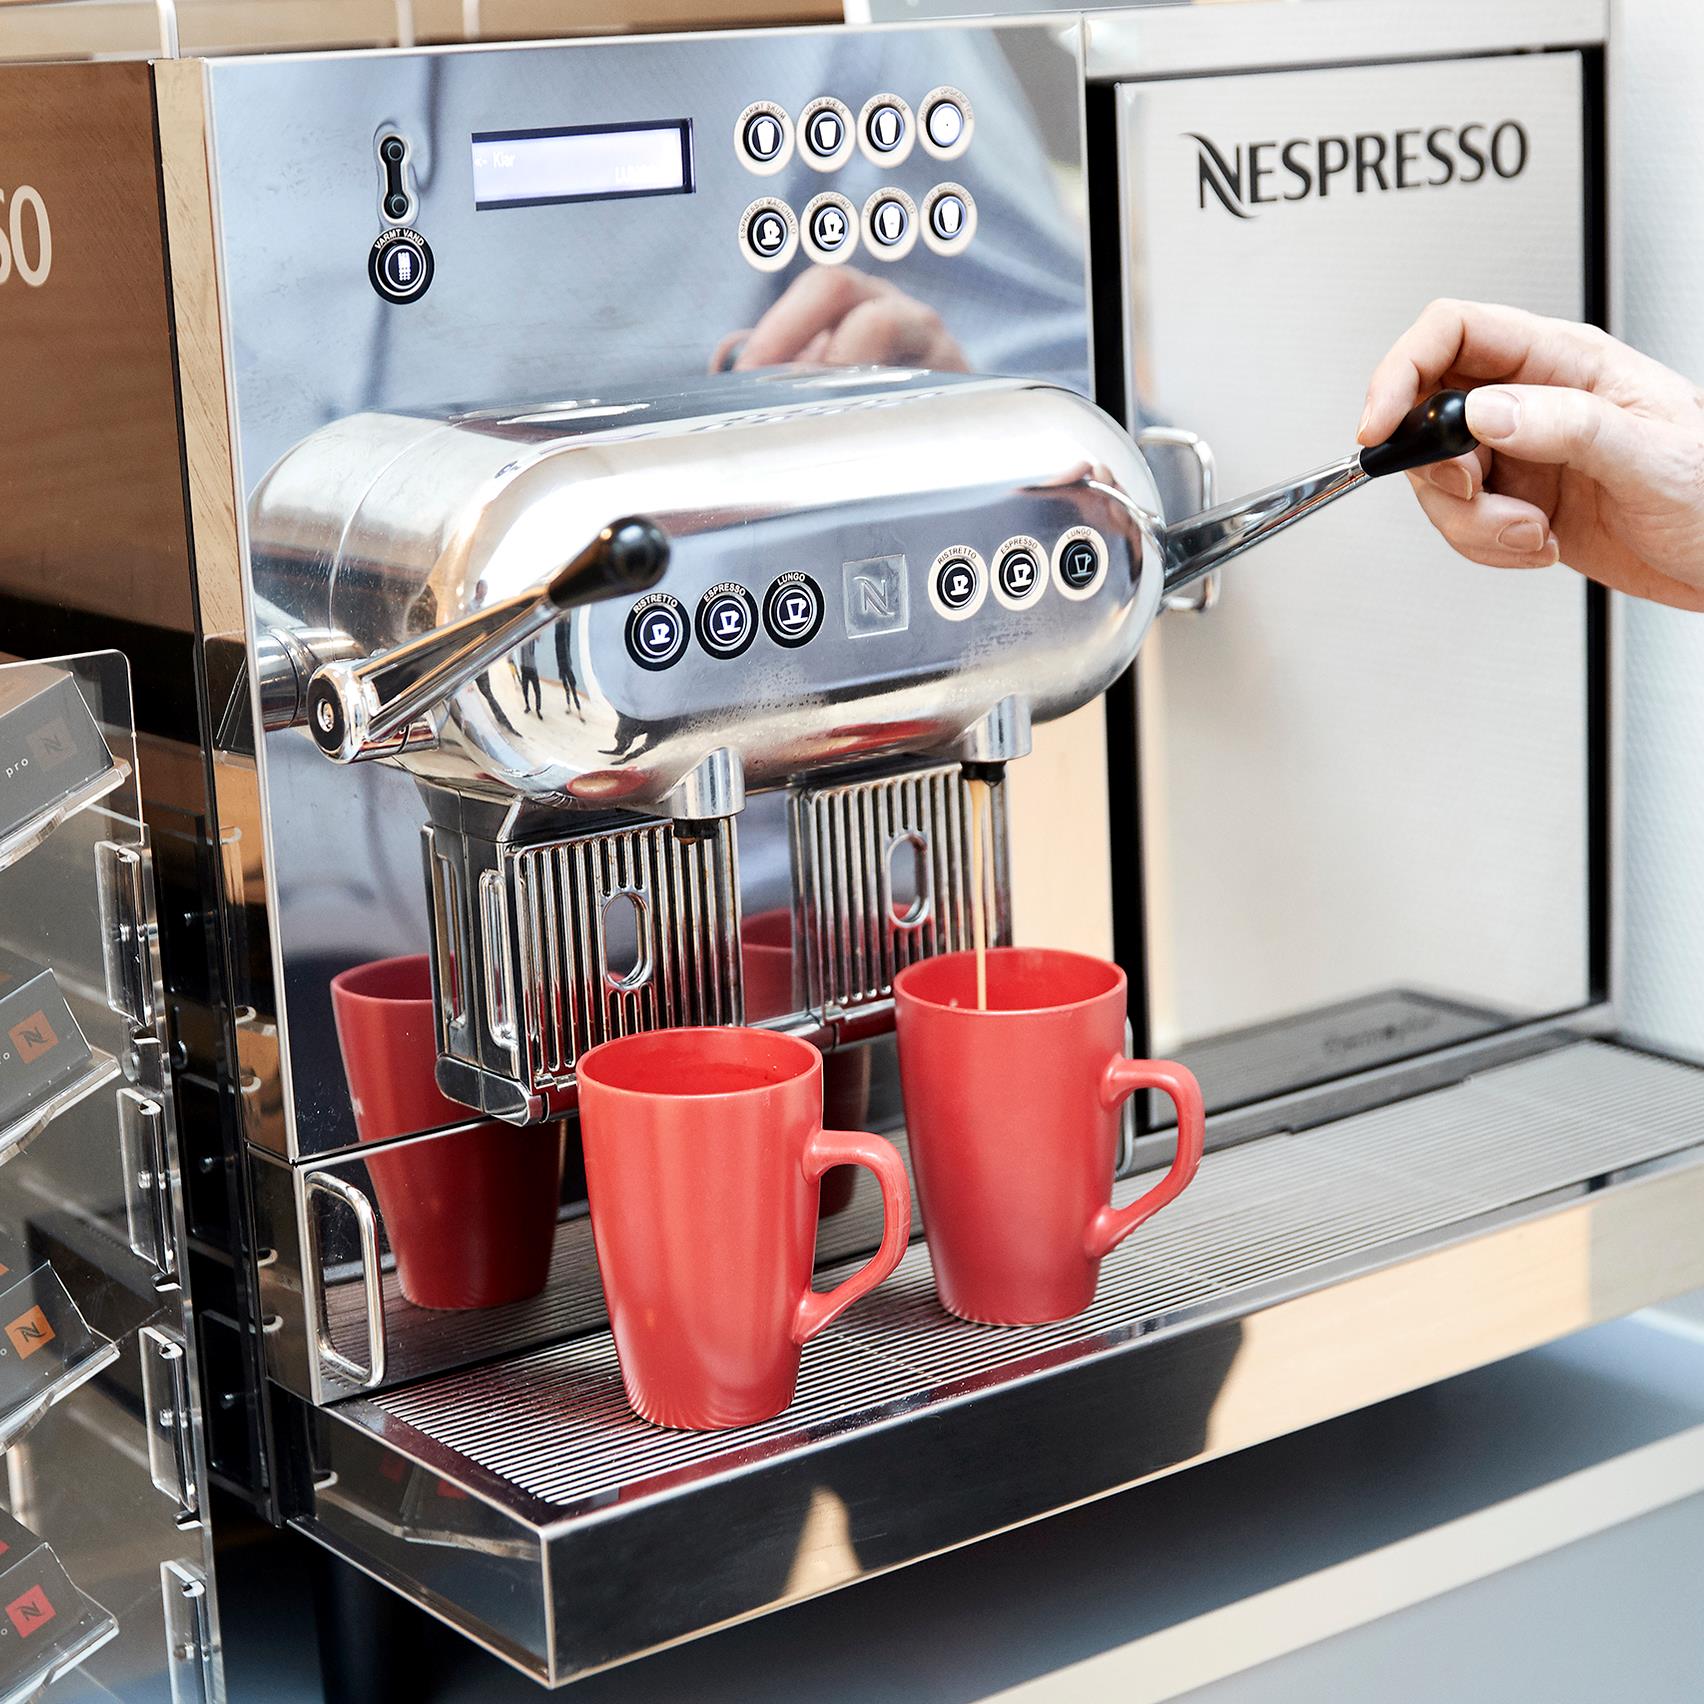 Der laves kaffe på Nespresso kaffemaskinen